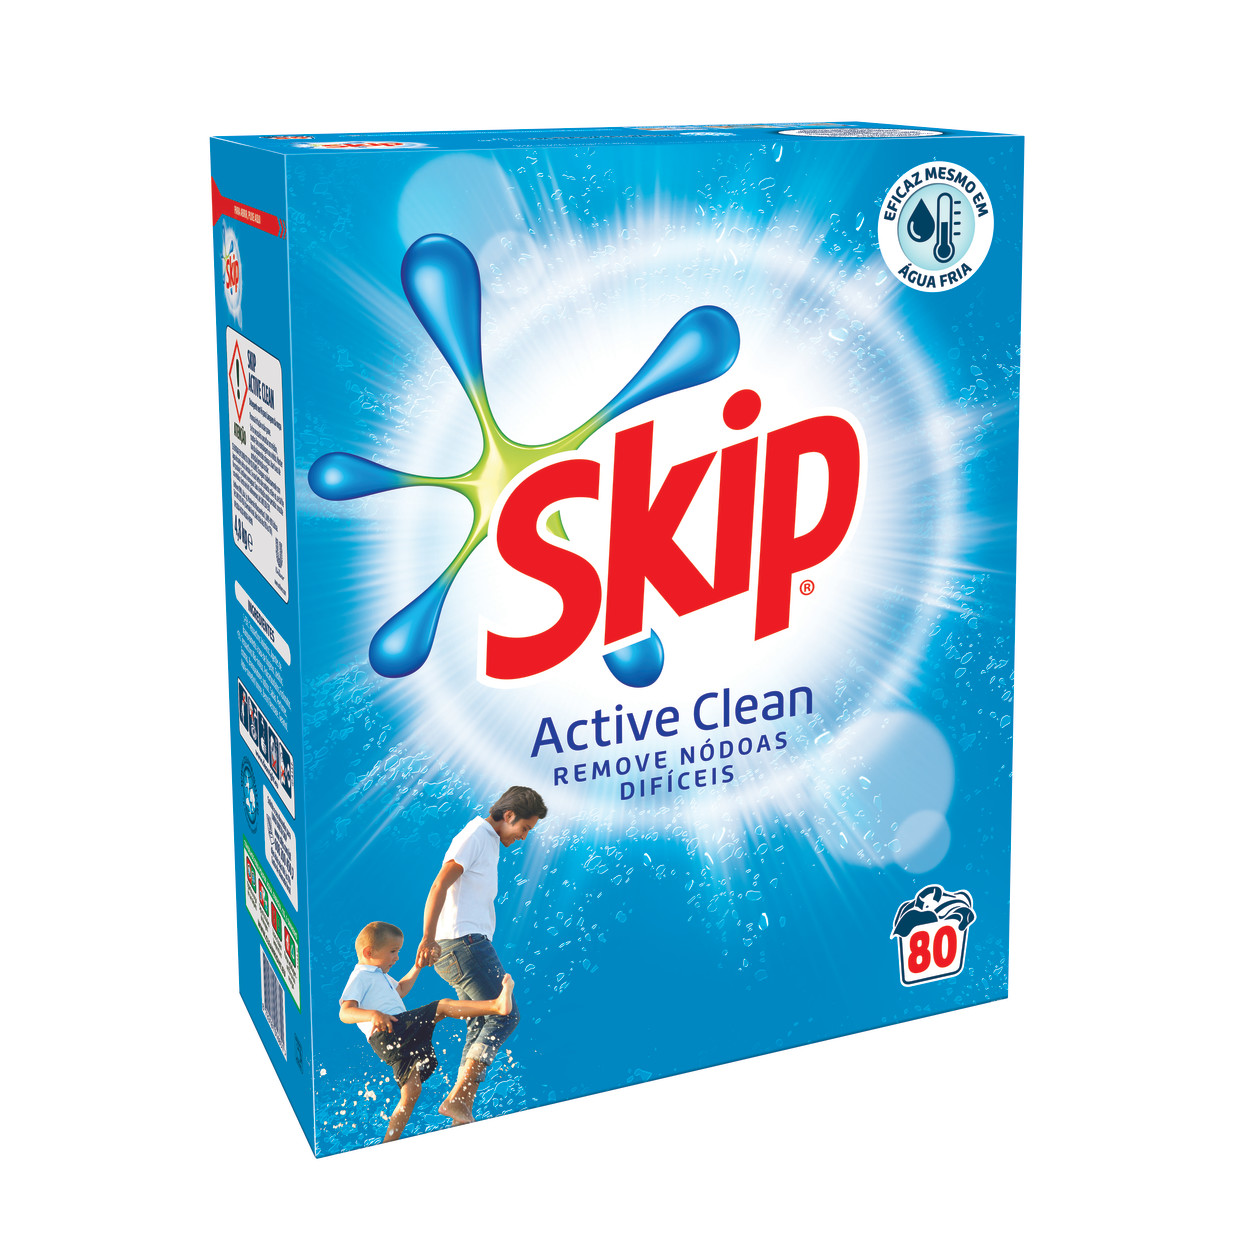 SKIP Detergente Pó Active Clean packshot